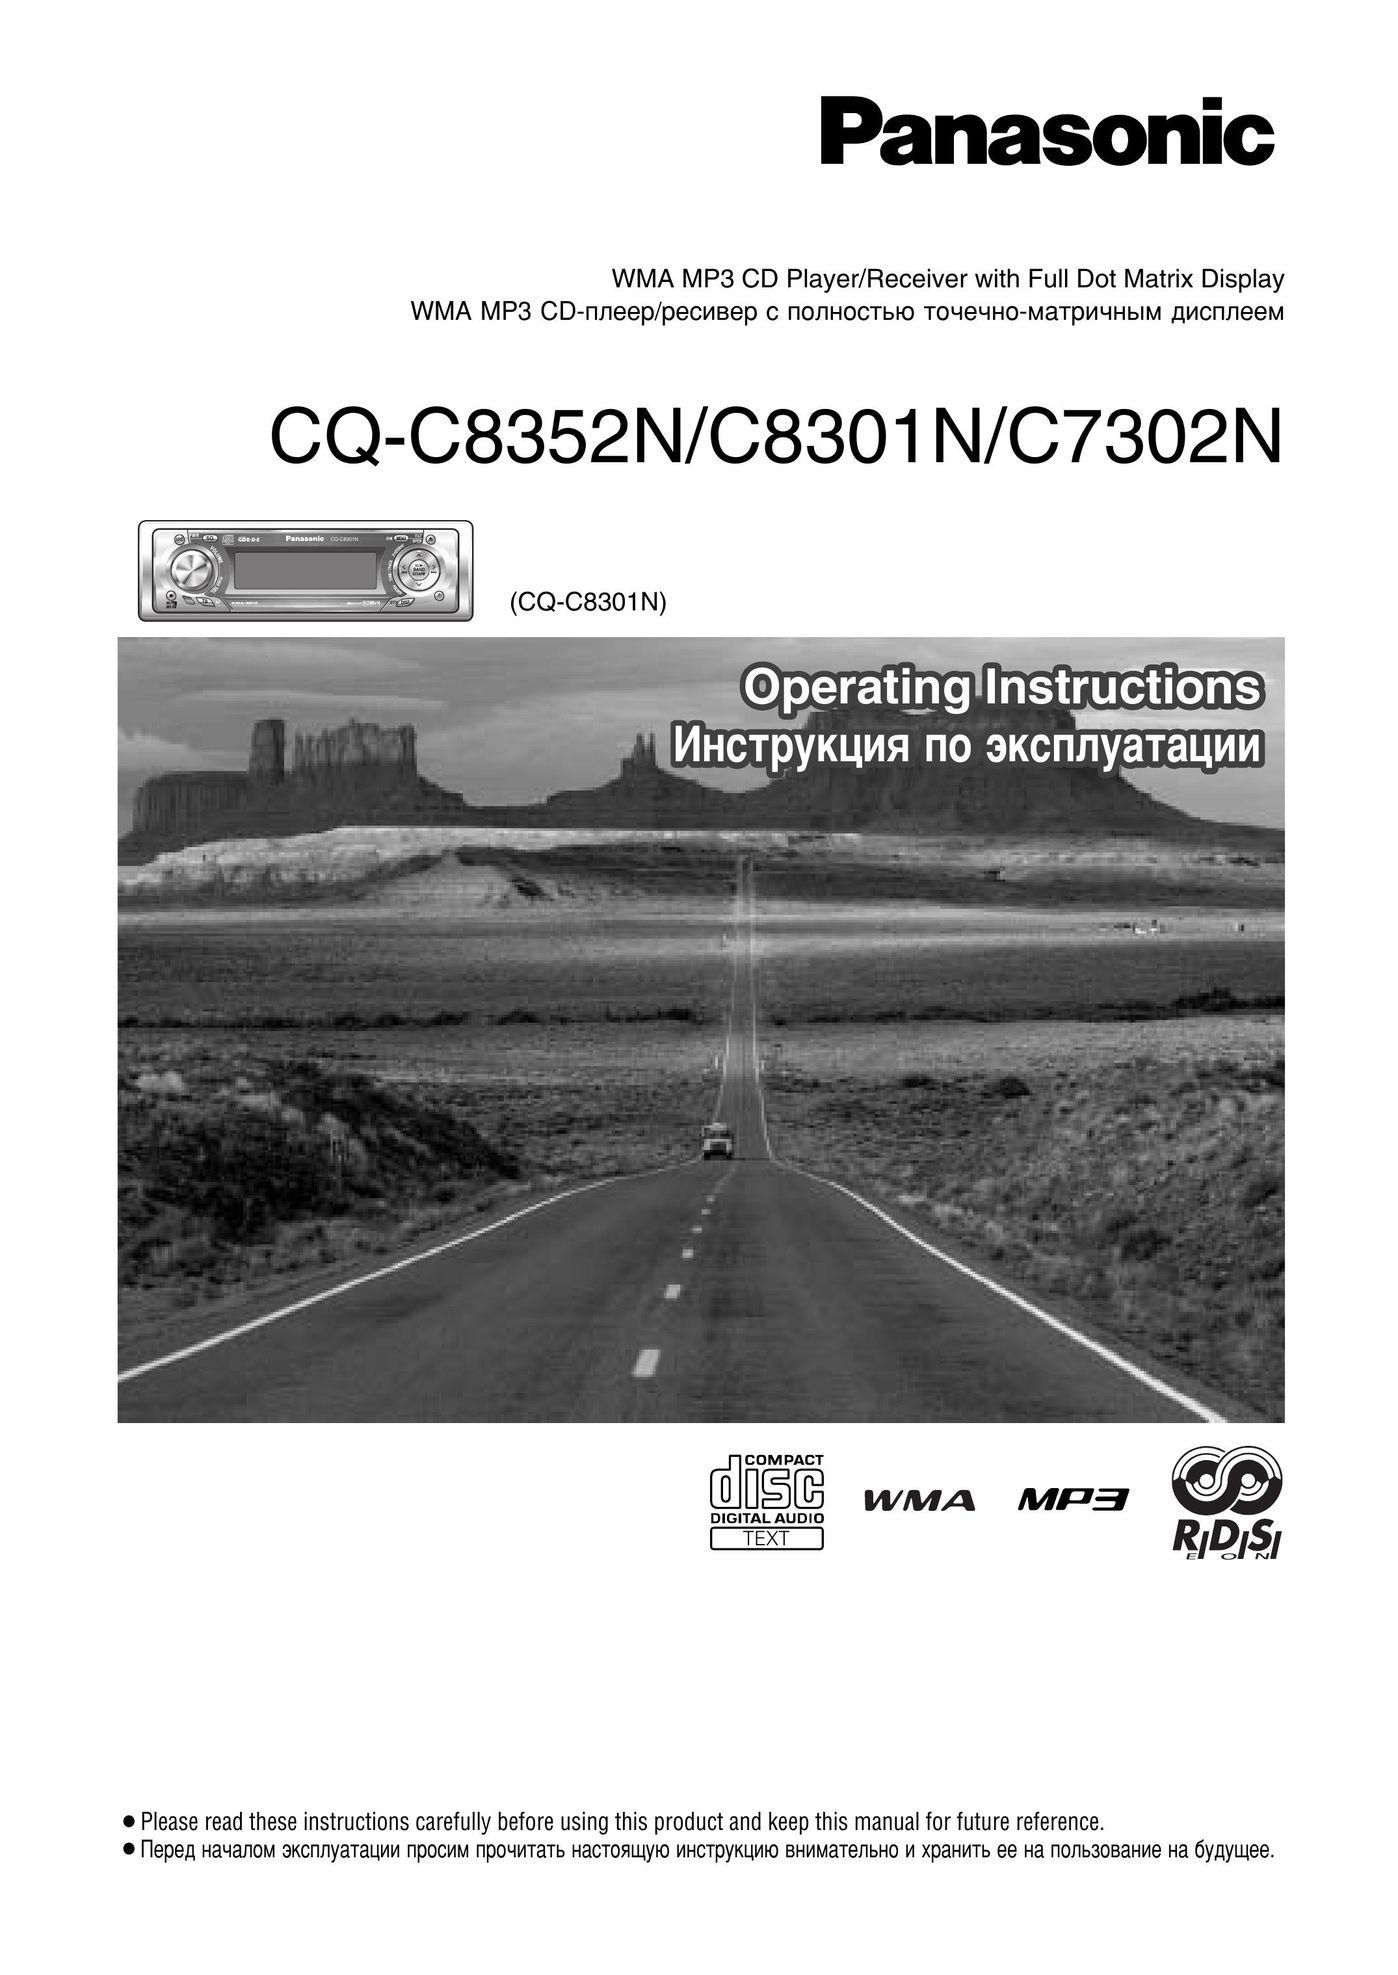 Panasonic CQ-C8301N MP3 Player User Manual